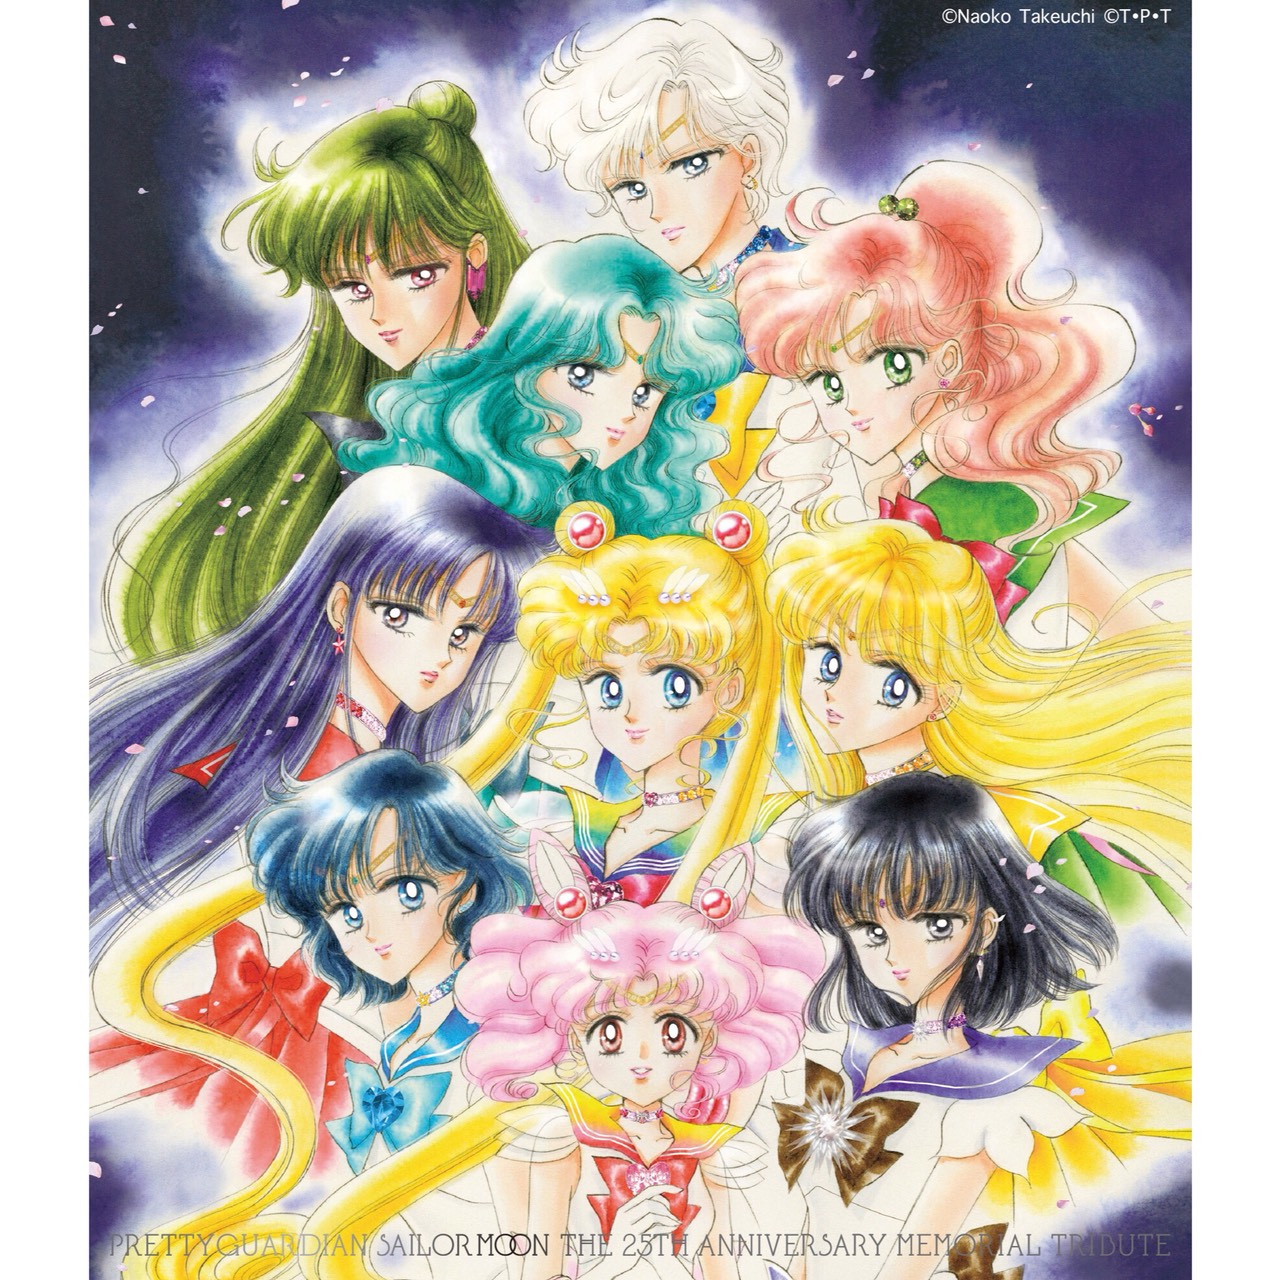 Sailor Moon Tribute Album Featuring SILENT SIREN, LiSA & More – Cover Art Unveiled